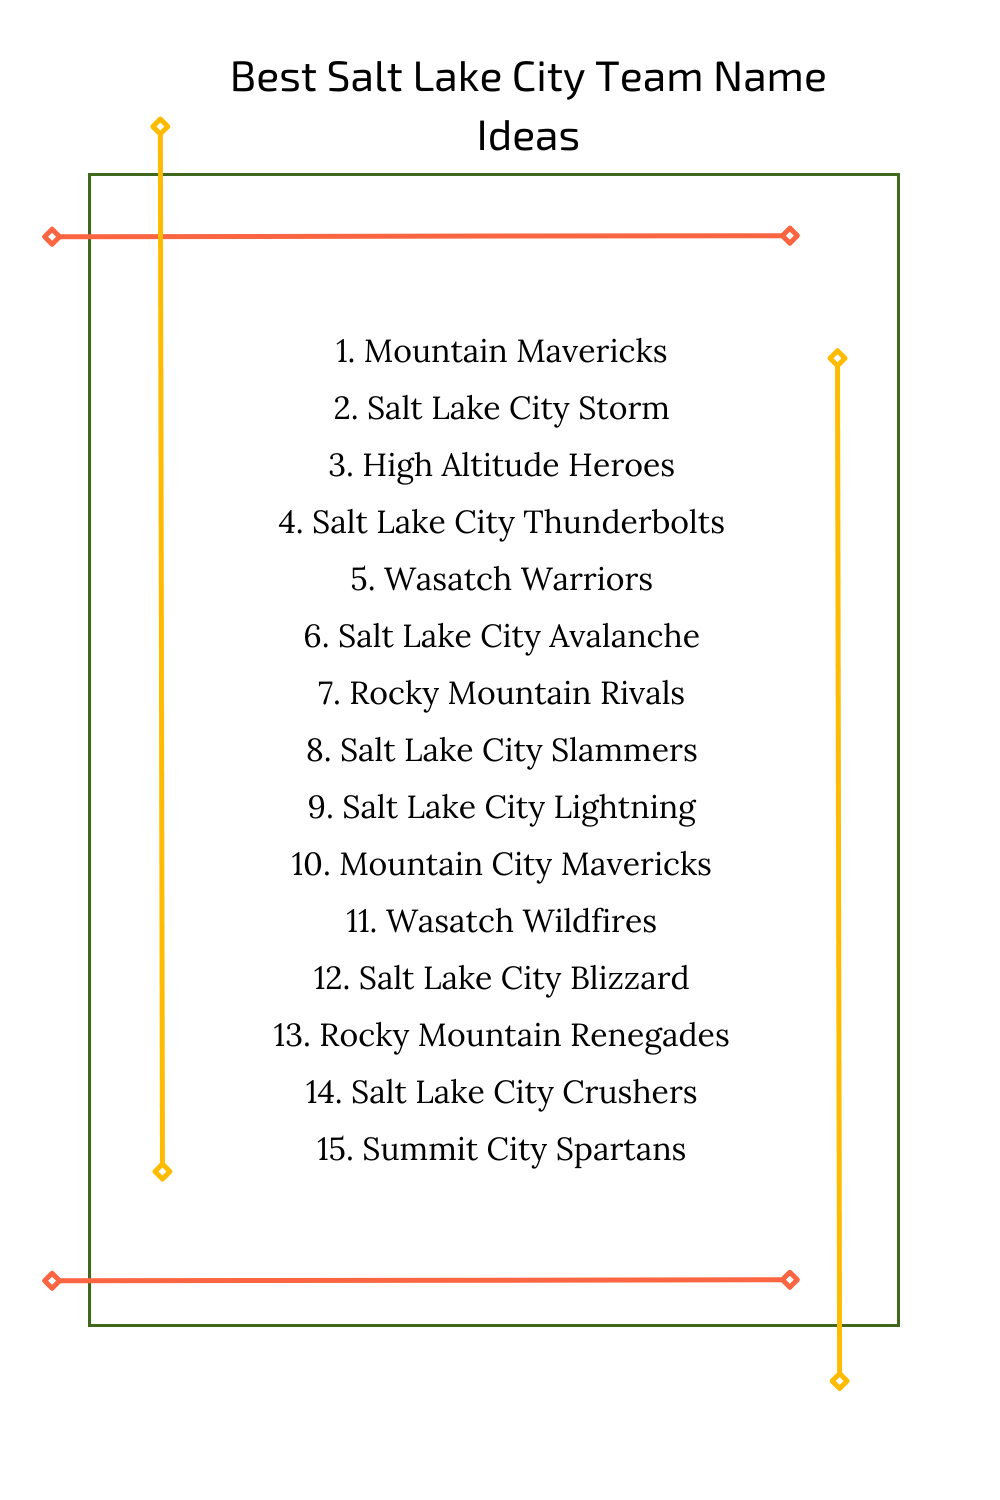 Best Salt Lake City Team Name Ideas